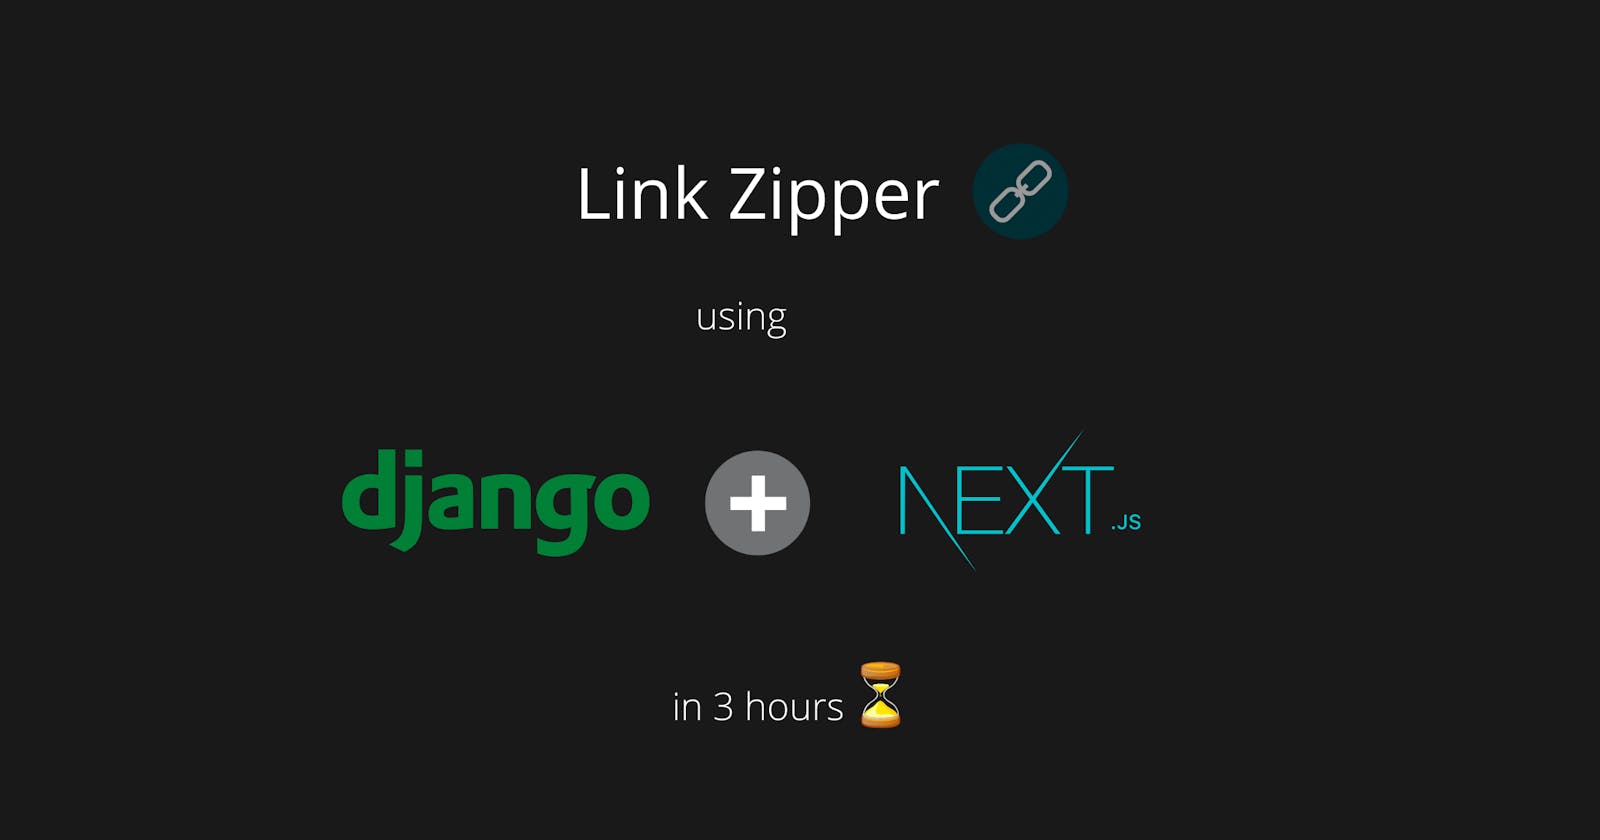 I created a linkzipper using Django & NextJs in 3 hours